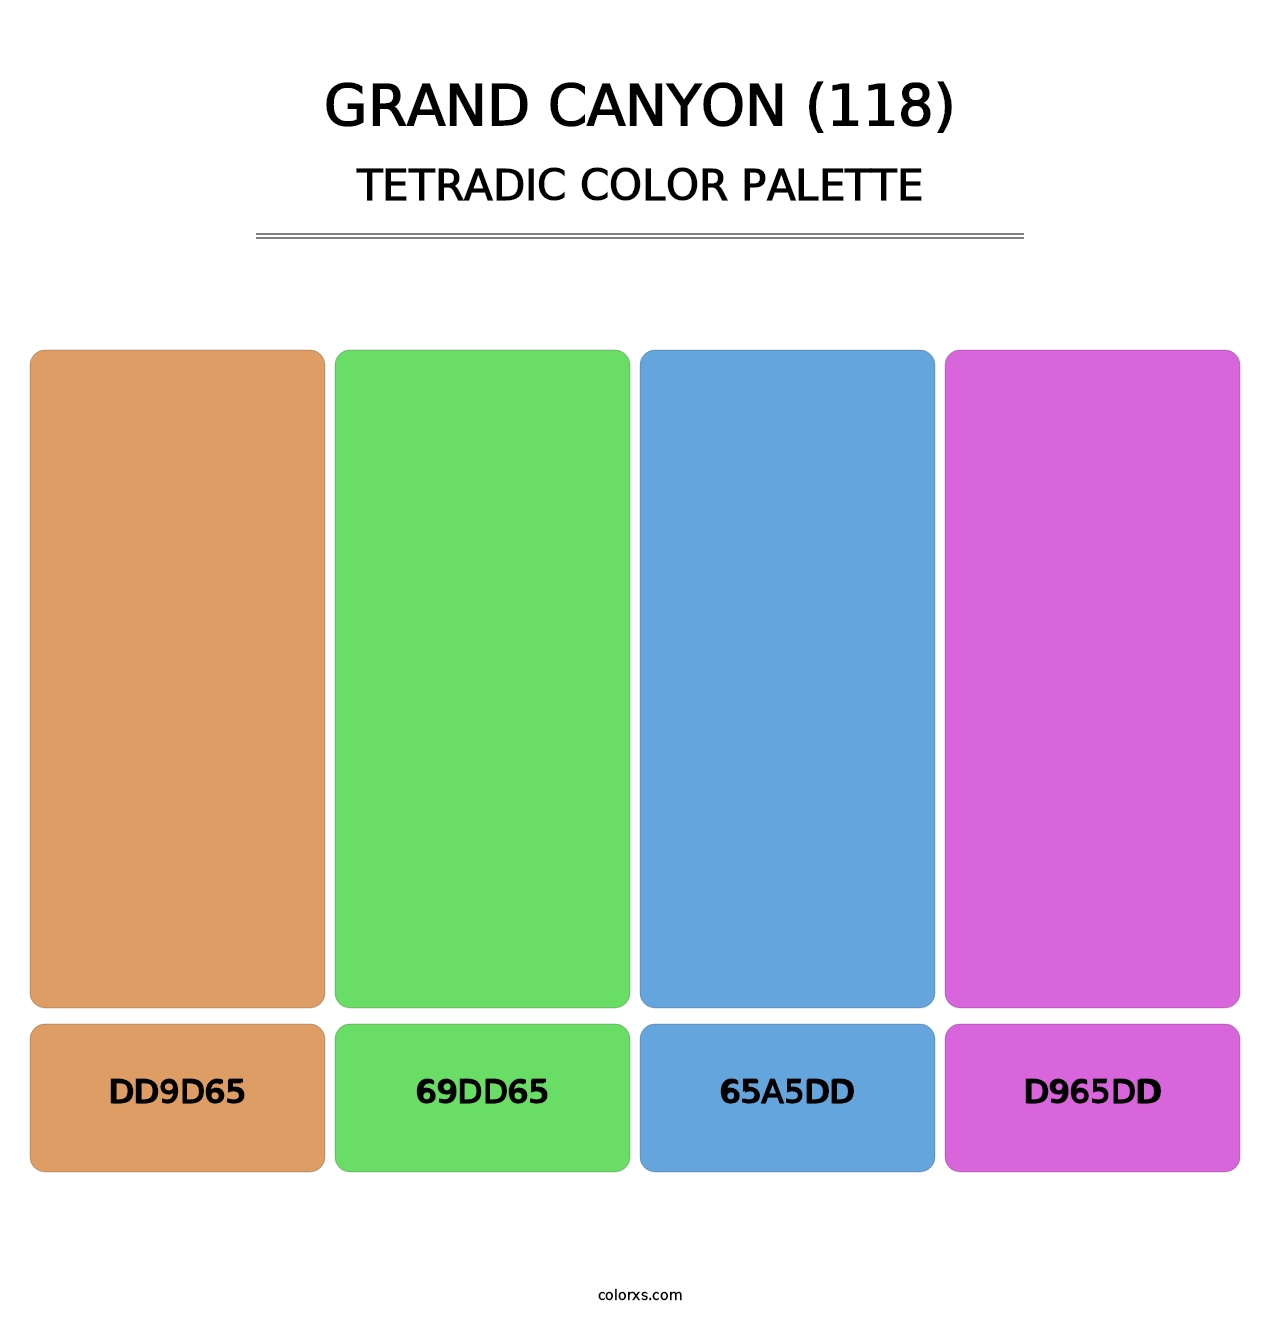 Grand Canyon (118) - Tetradic Color Palette